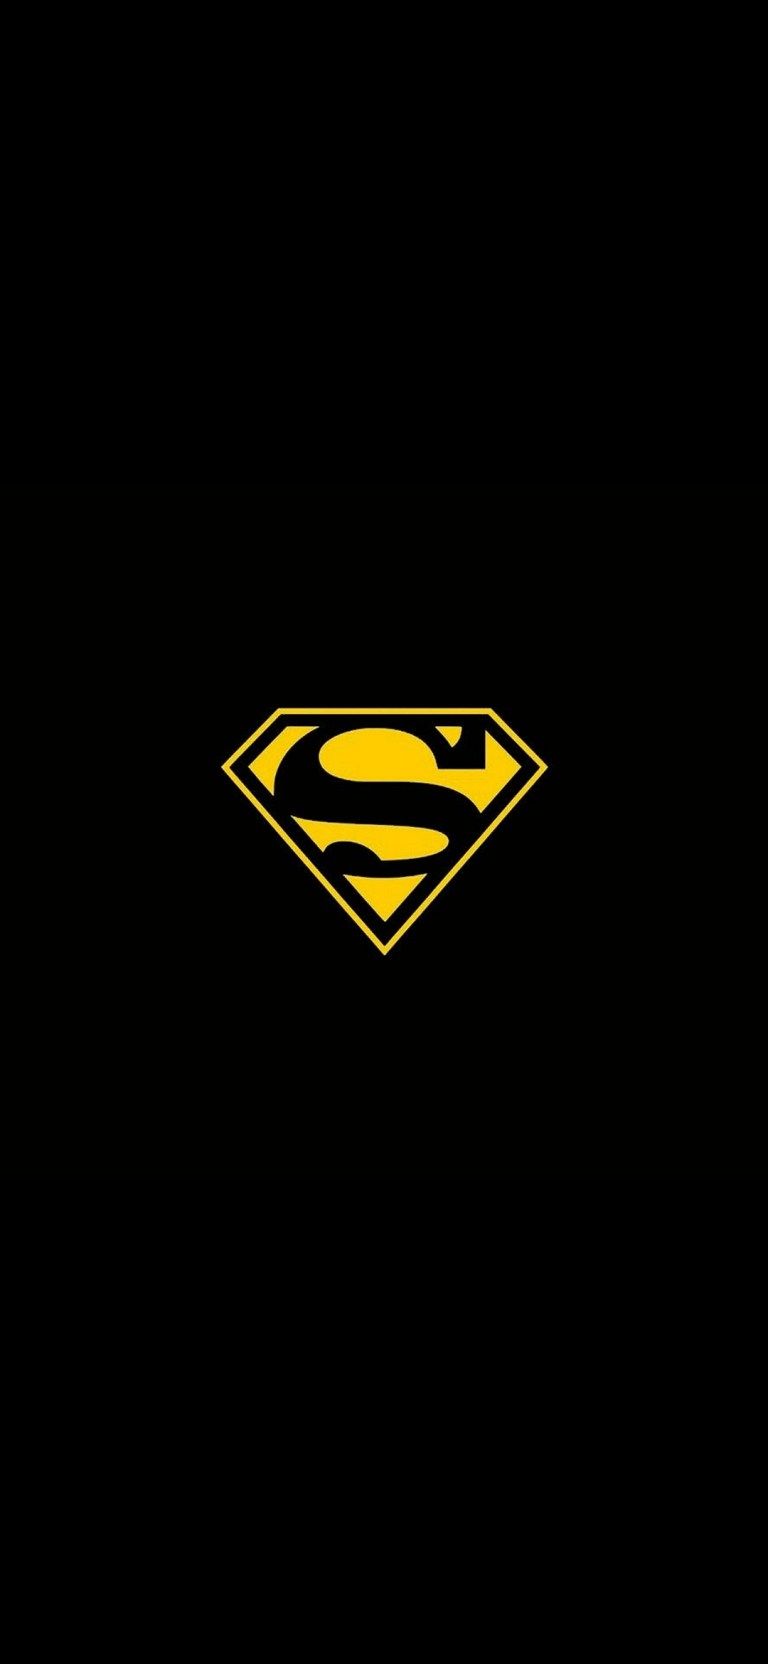 DC Comics Superman Dark Wallpaper for Android Mobile